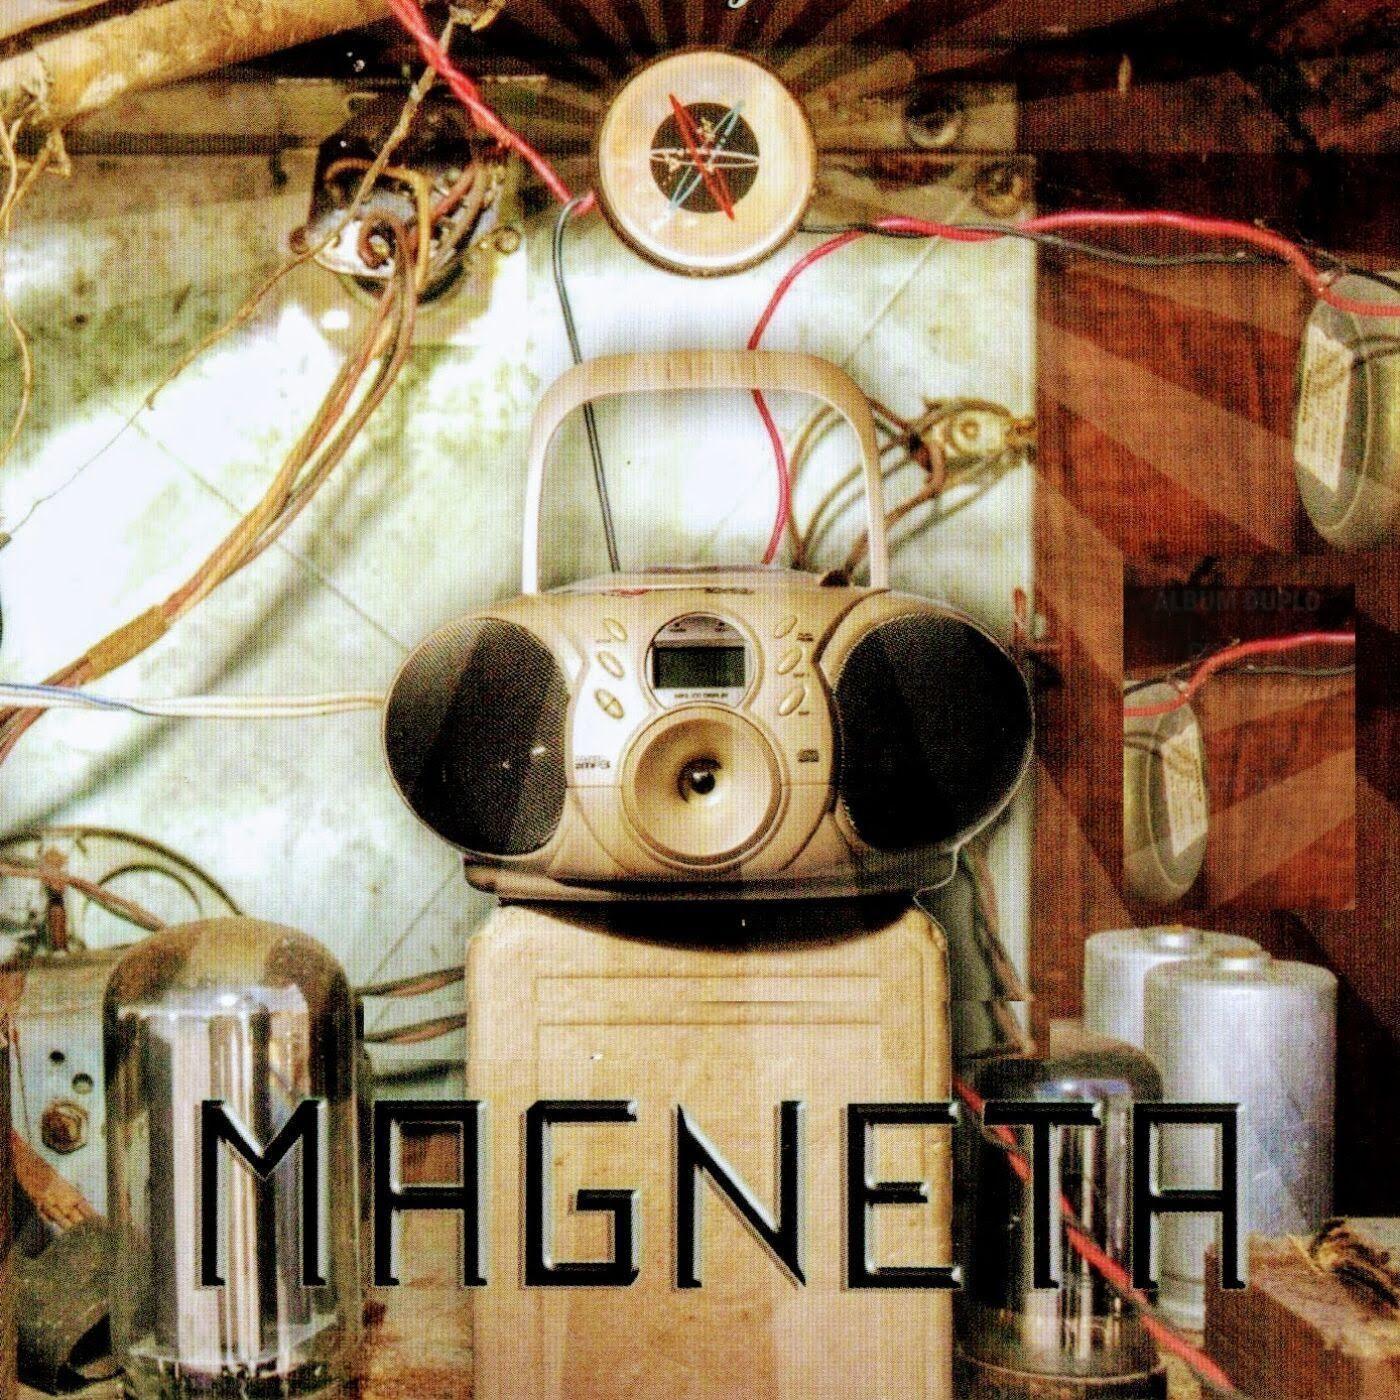 Magneta